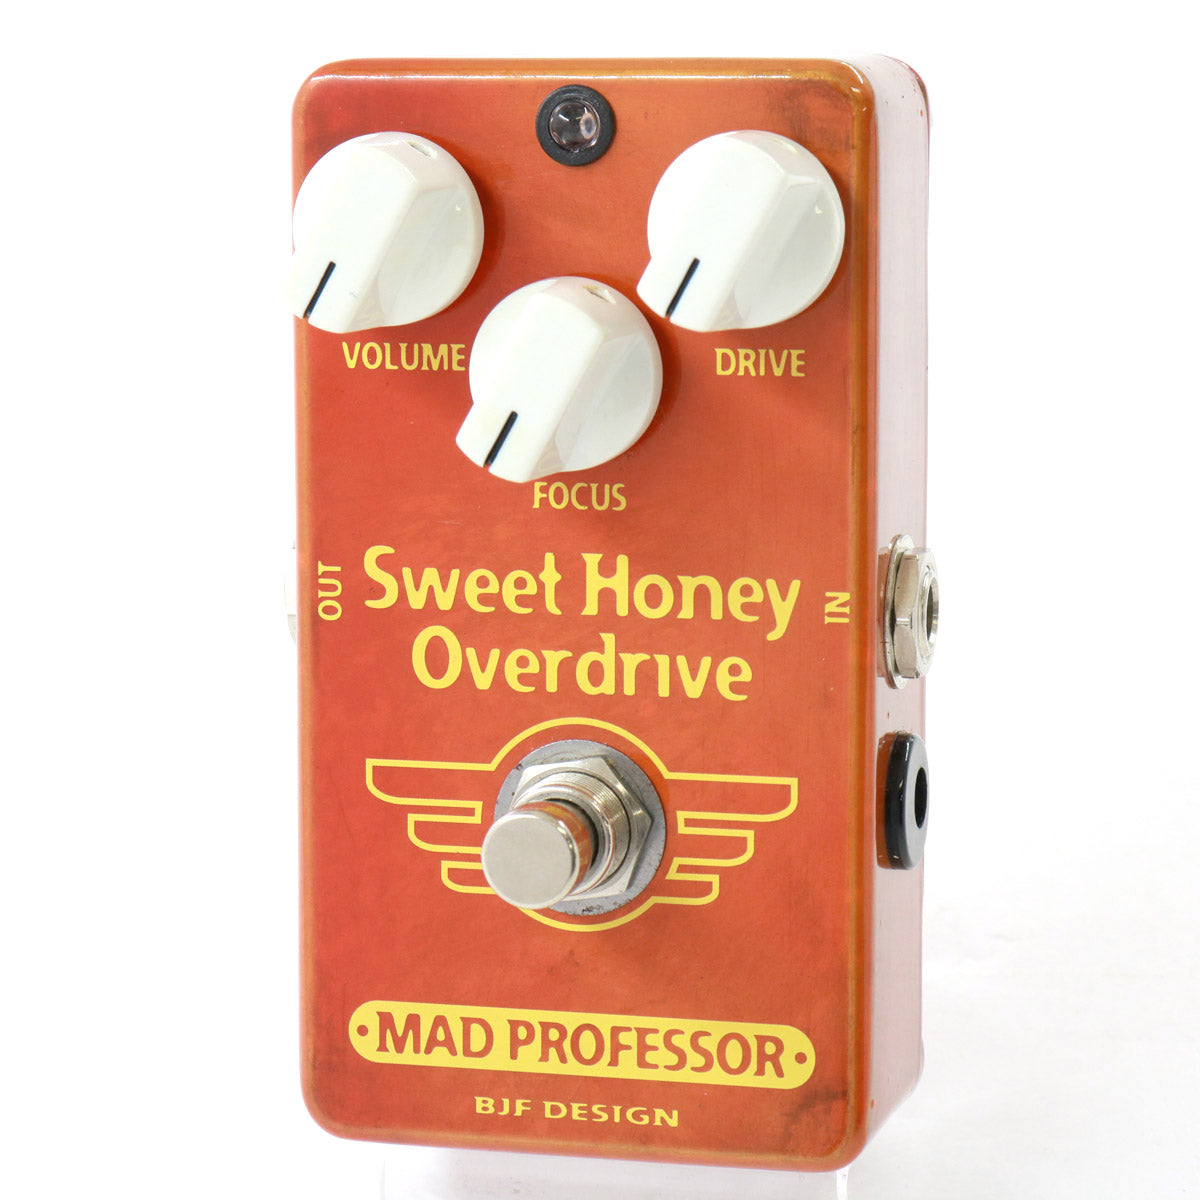 [SN SHOD 0299] USED MAD PROFESSOR / Sweet Honey Overdrive HW Overdrive for guitar [08]